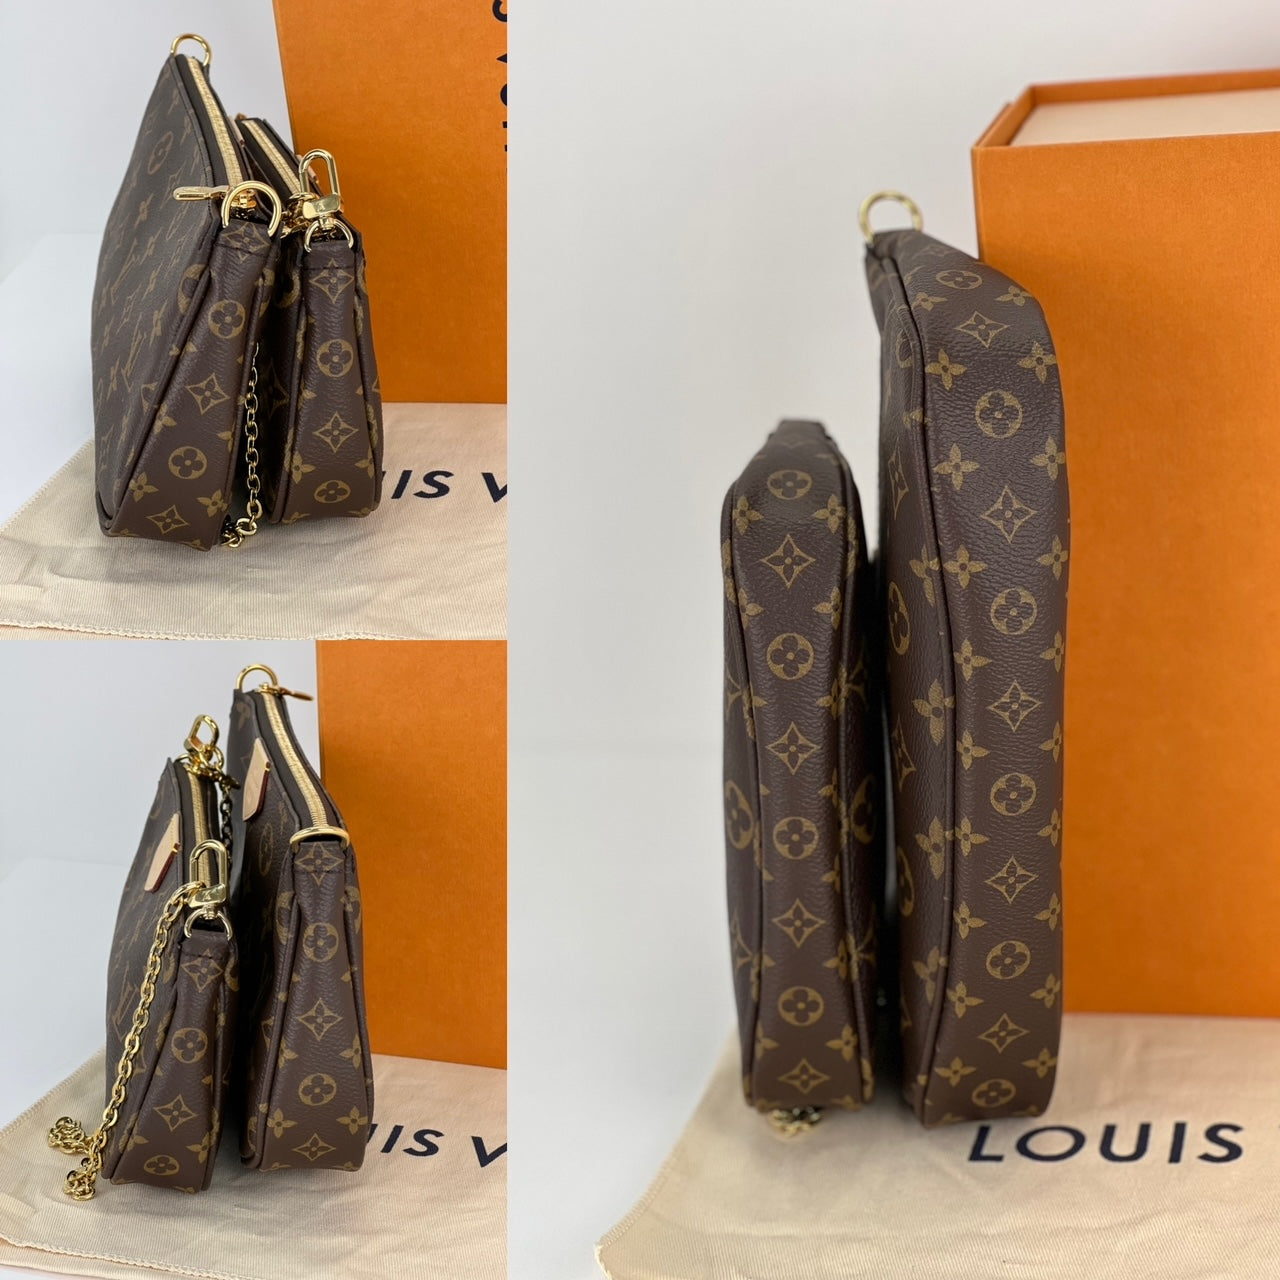 Louis Vuitton Pochette Accessoires in Monogram Canvas - Sindur Style